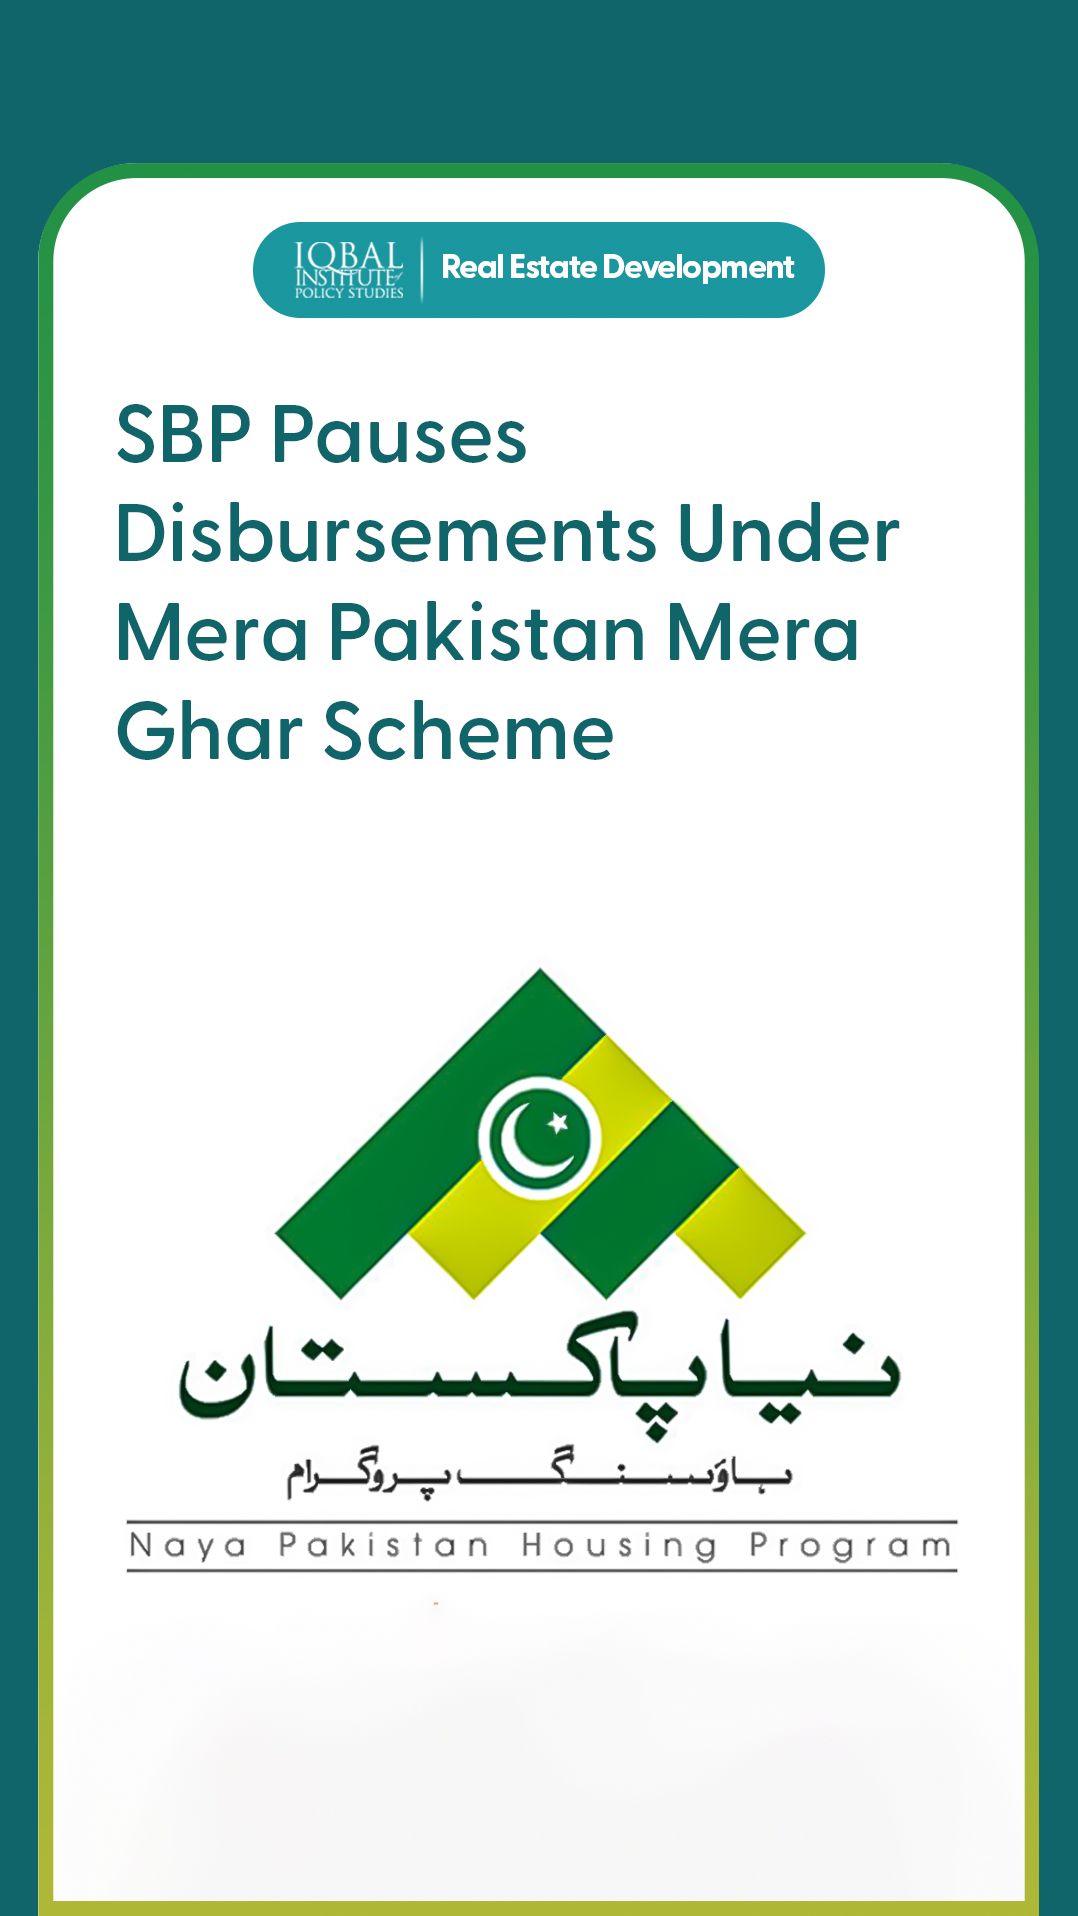 SBP pauses Disbursements under Mera Pakistan Mera Ghar Scheme